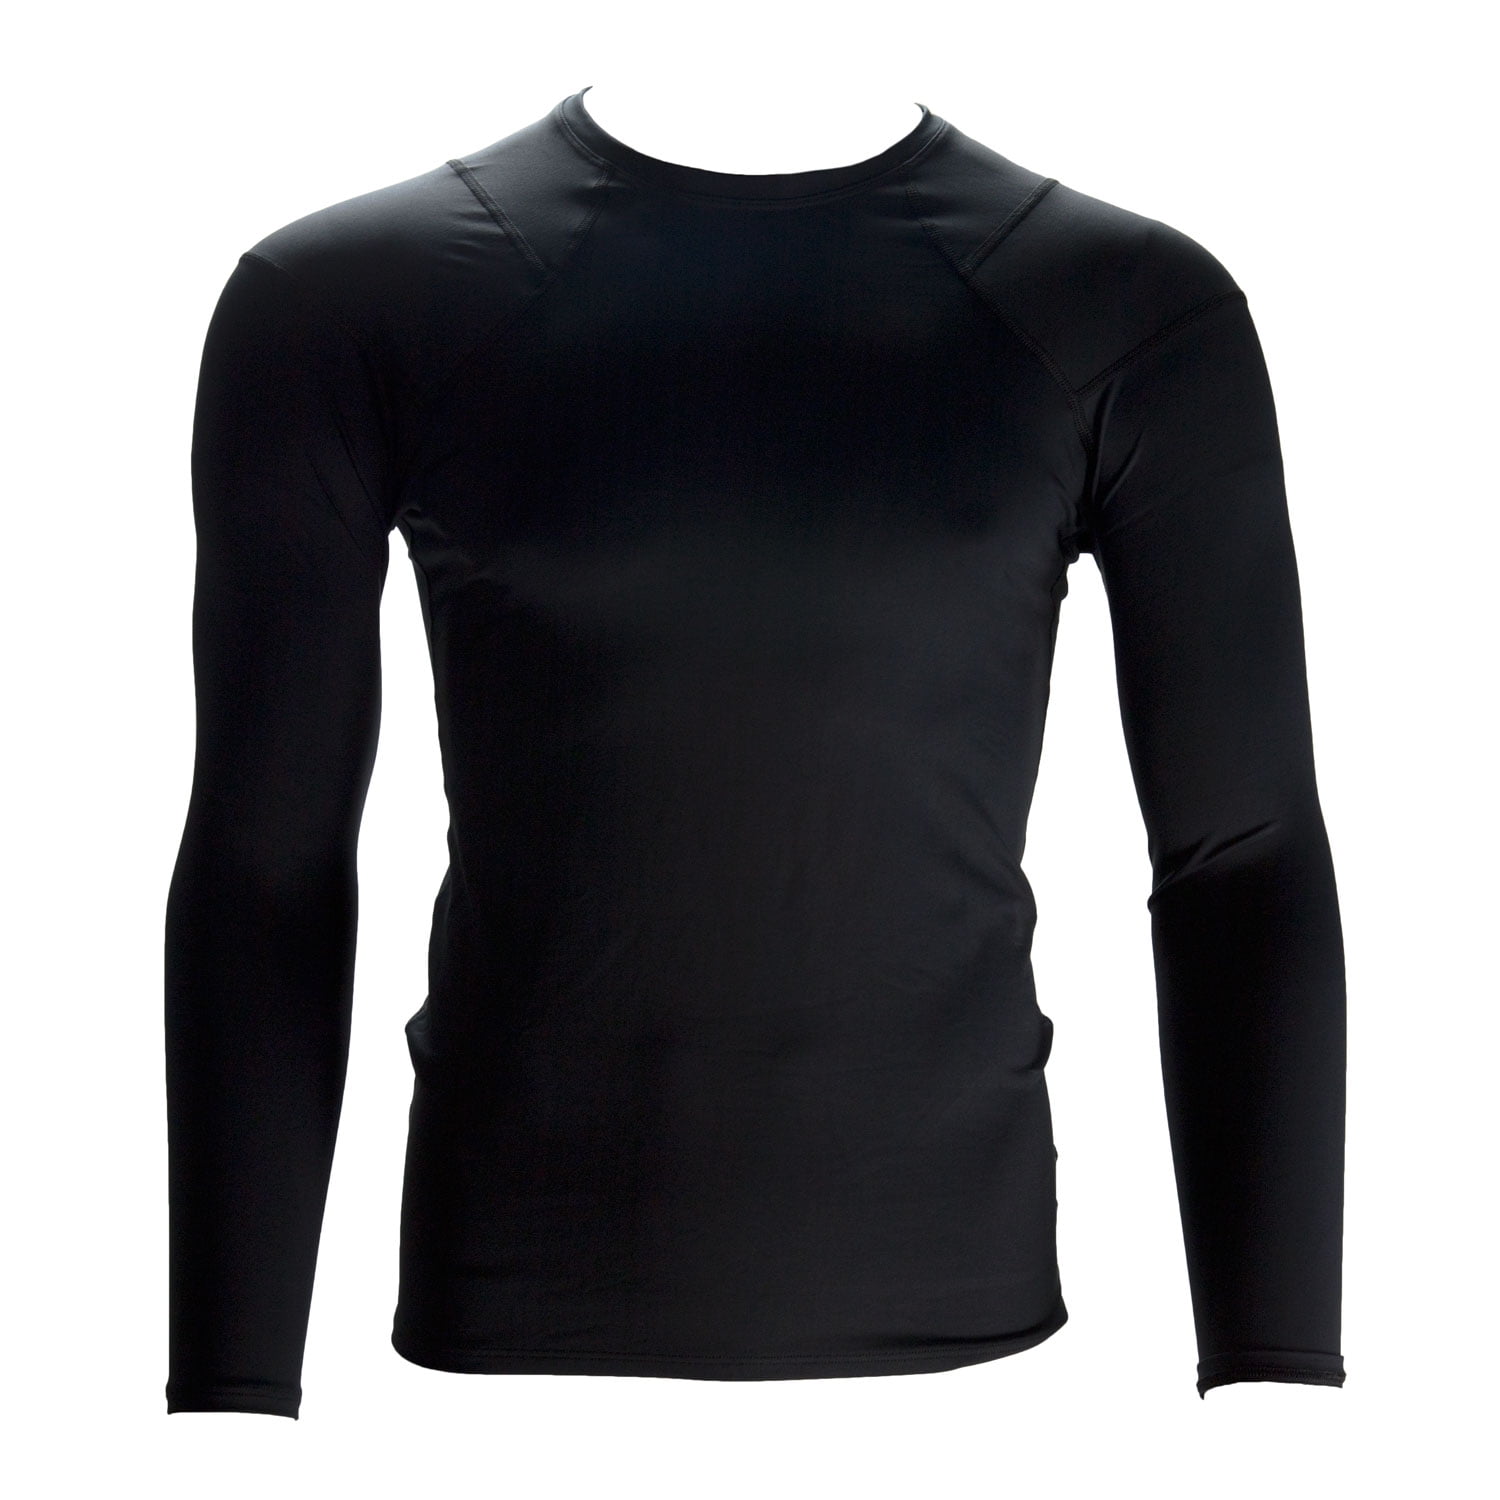 TOMMIE COPPER Men's Shoulder Centric Support Shirt, Black, Medium ...